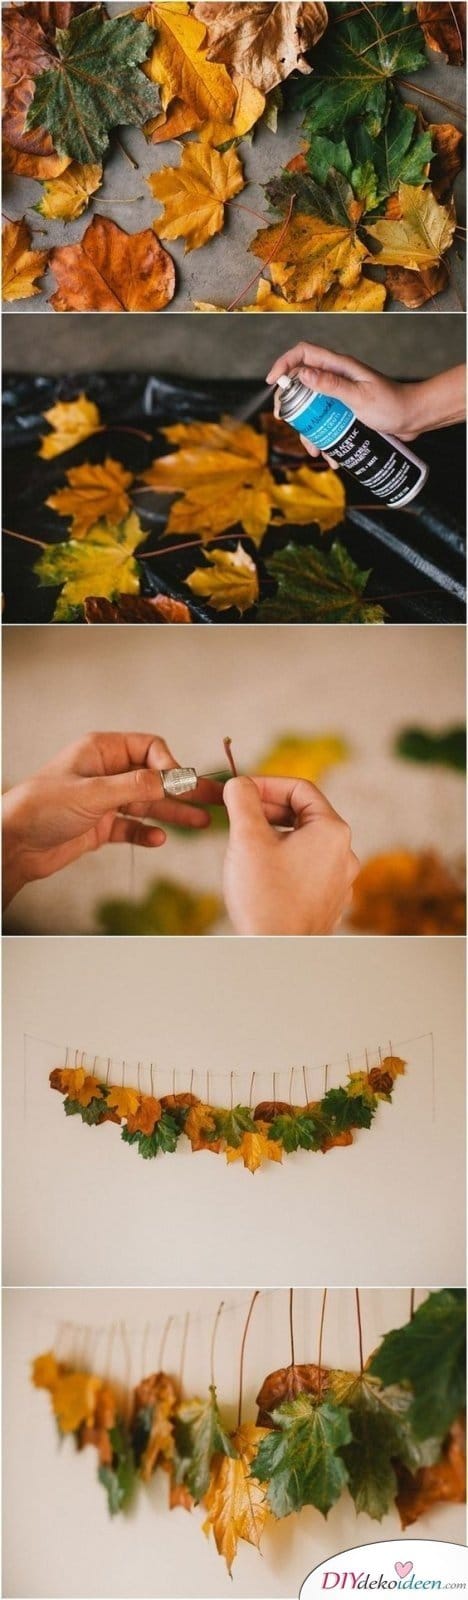 Herbstdeko basteln -DIY Bastelideen - Herbstblätter basteln 